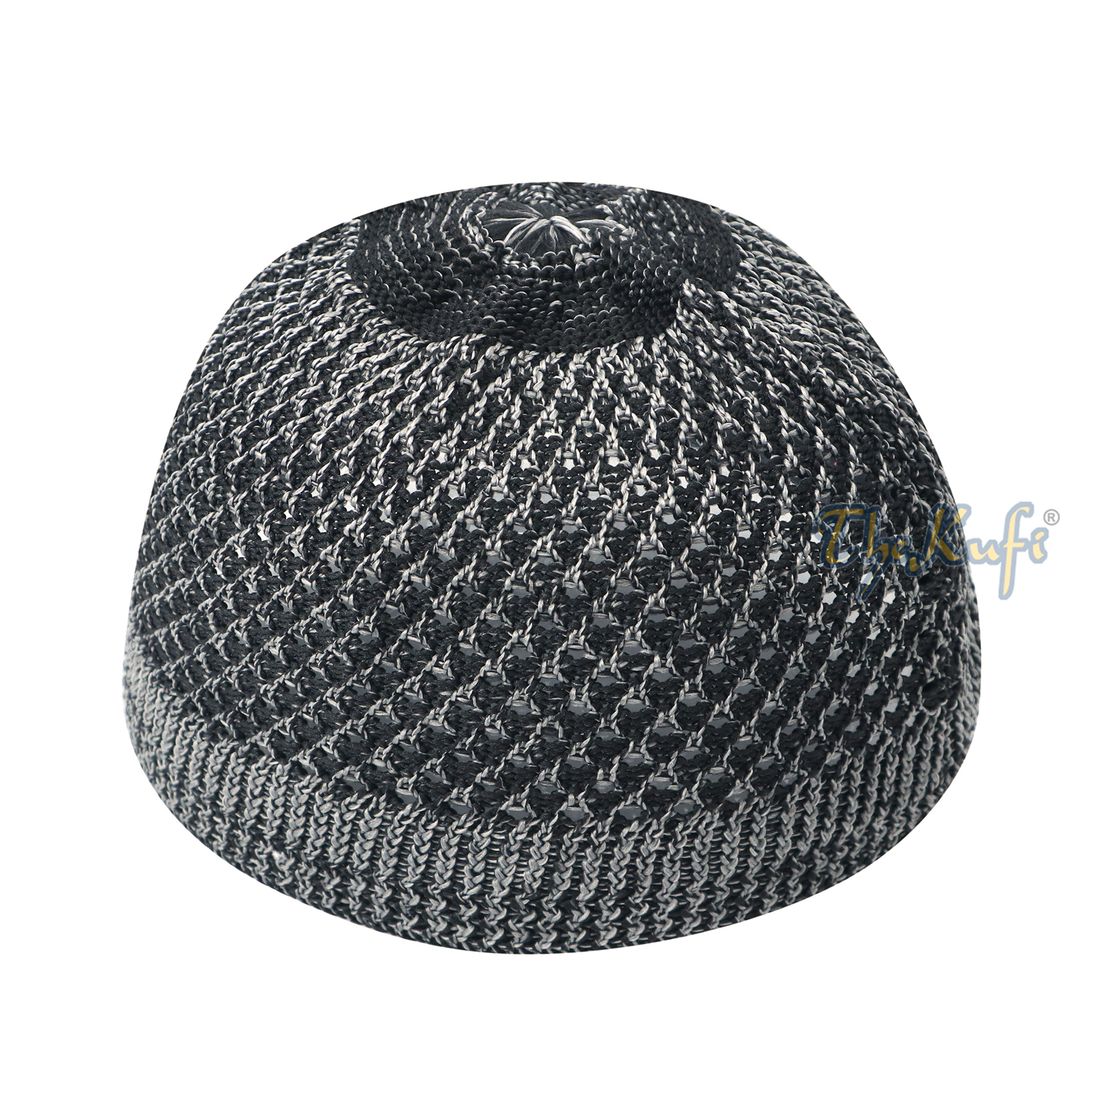 Faded Dark Gray Black Open-Weave Nylon Stretchy Kufi Hat Skull Cap Beanie